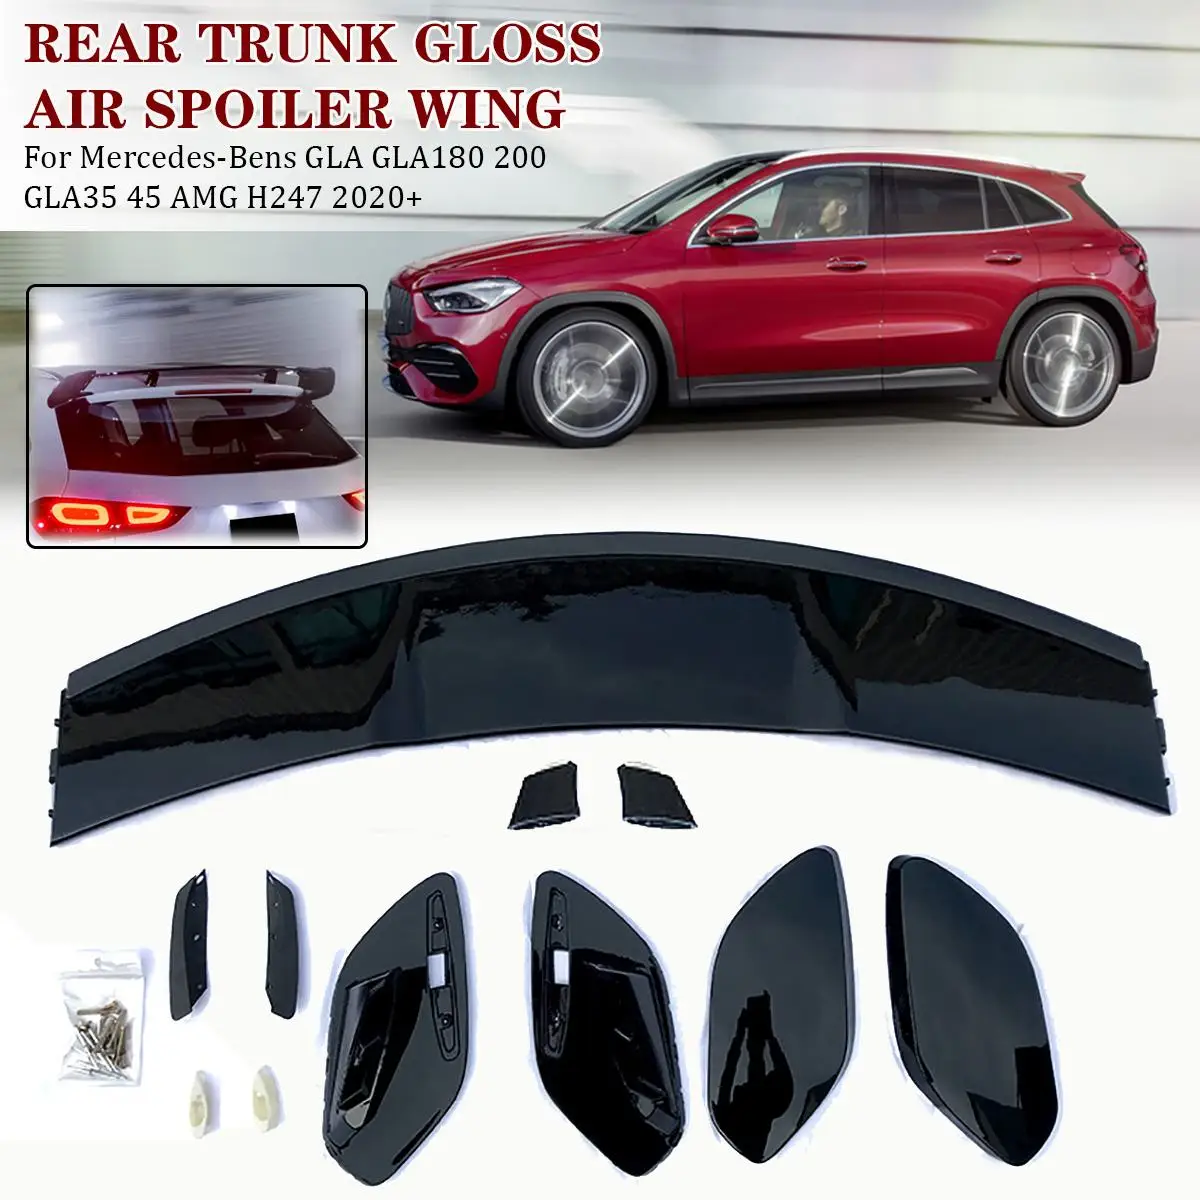 

Rear Trunk Glossy Air Spoiler Wing Rear Roof Spoiler For Mercedes-Bens GLA GLA180 200 GLA35 45 AMG H247 2020+